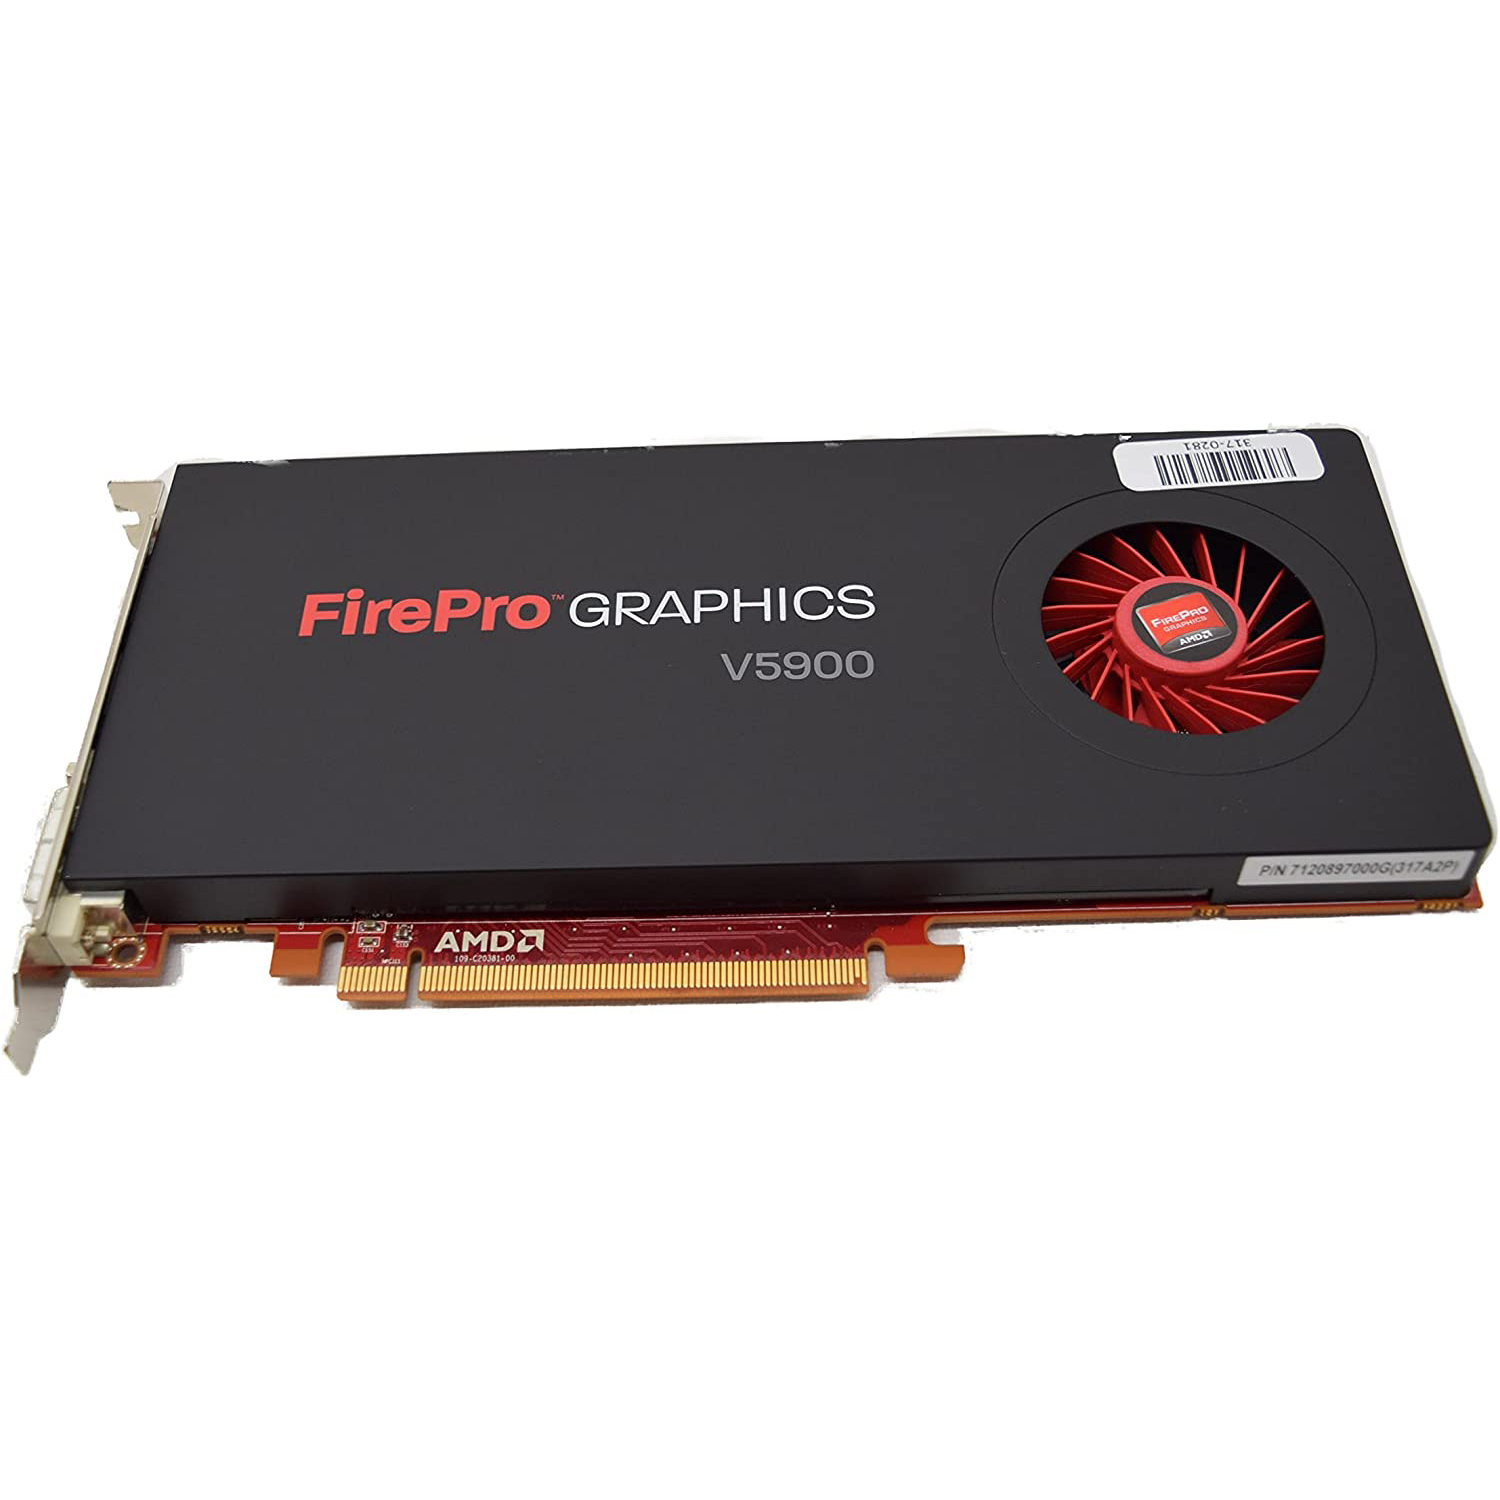 VGA AMD FIREPRO V5900 2G DDR5 DVI &2 x DISPLAYPORT  PCIEX  /256BIT مستعمل ,Other Used Items